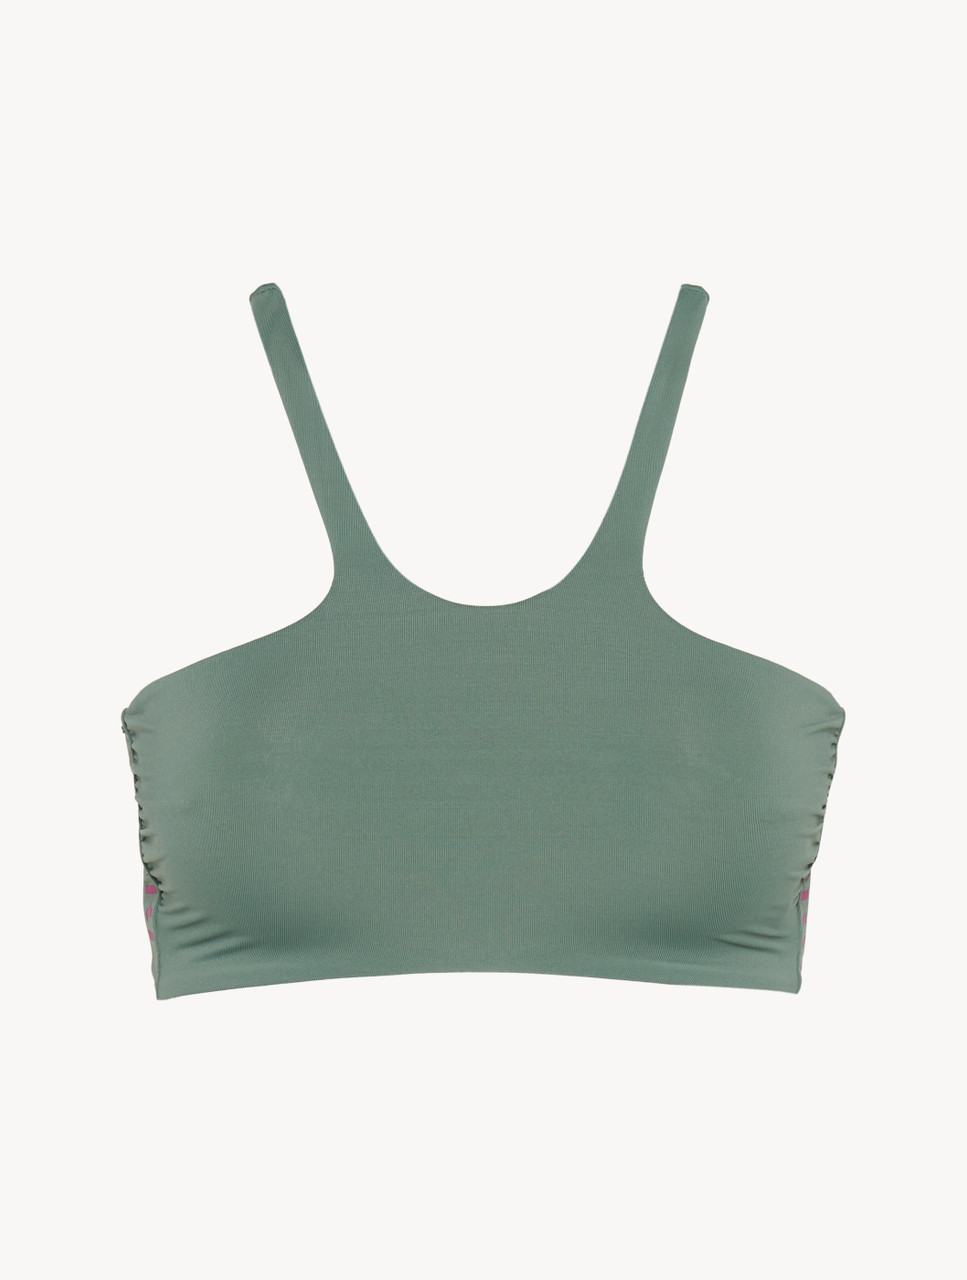 verwennen kleermaker goedkoop Luxury Unpadded Bikini Top in Khaki Green with Logo | La Perla